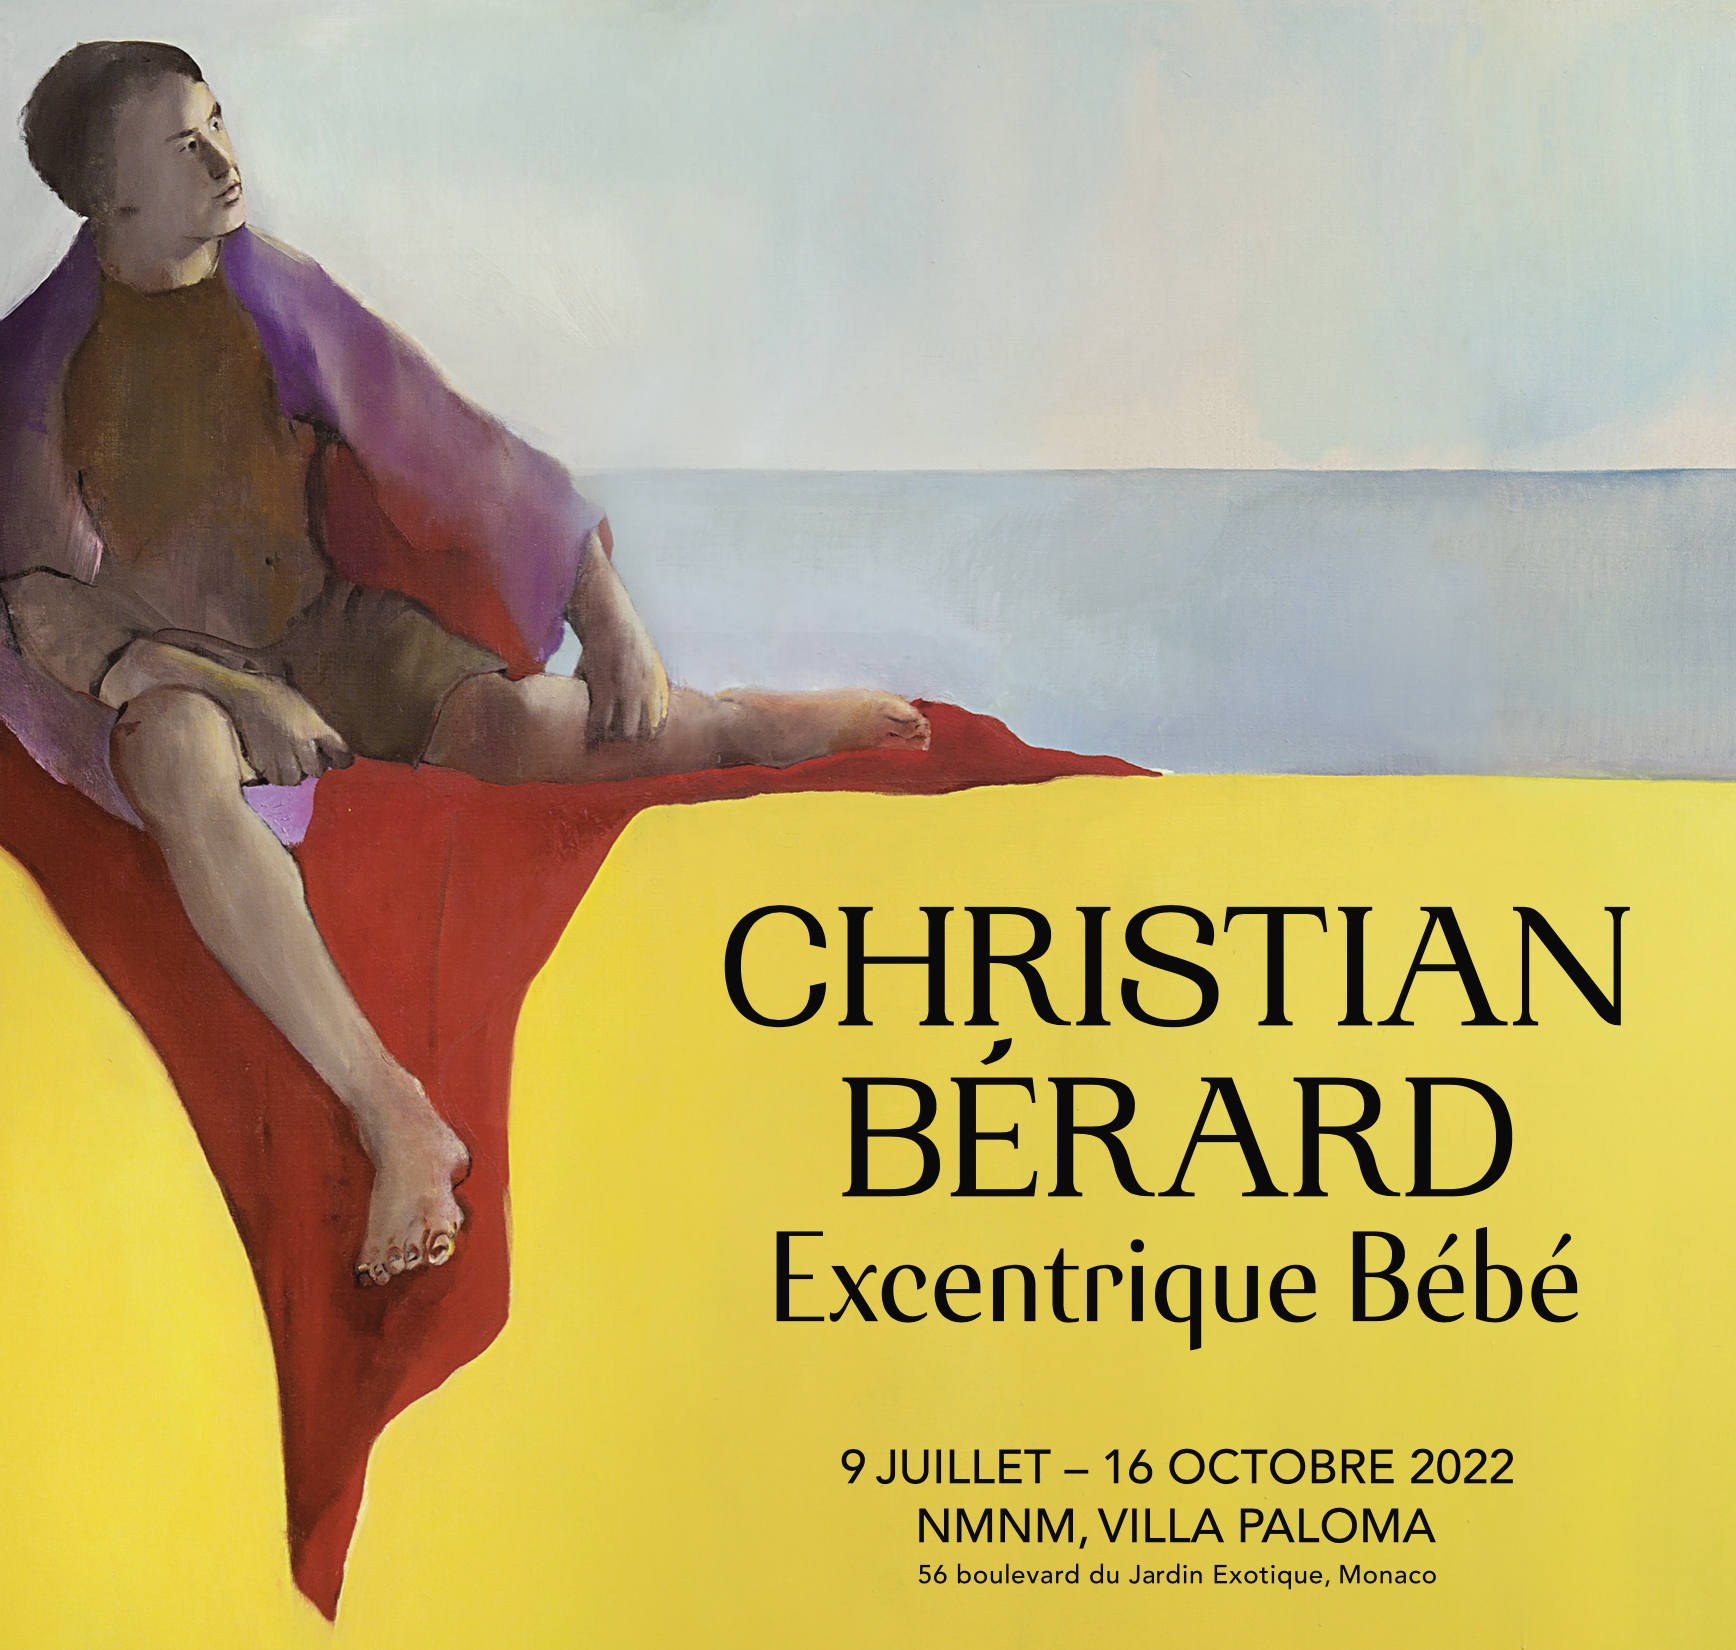 CHRISTIAN BERARD. EXCENTRIQUE BEBE